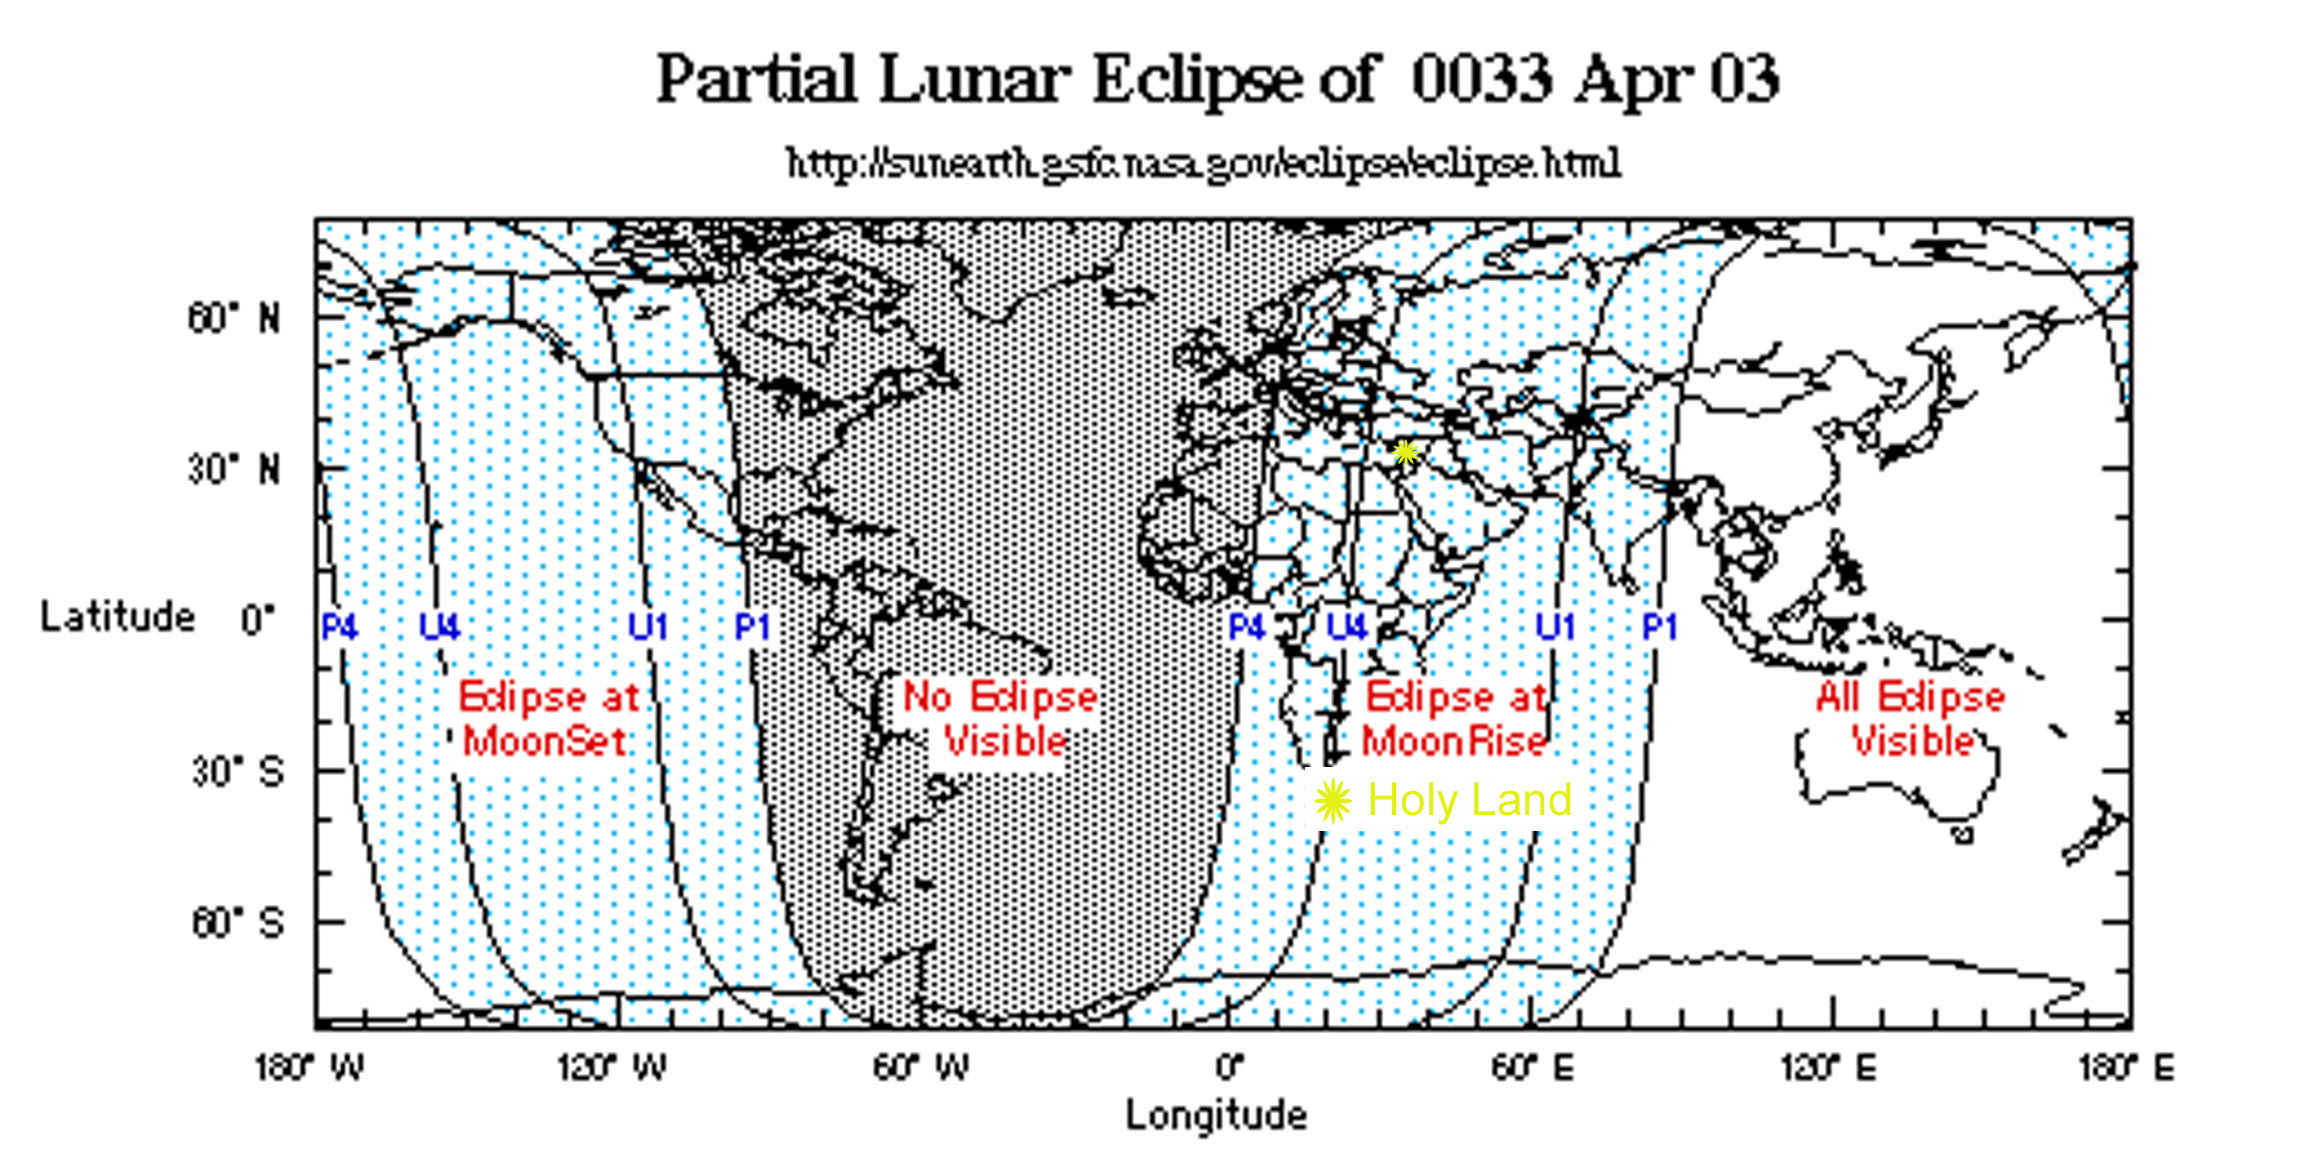 33_04-03-lunar-eclipse-nasa.jpg